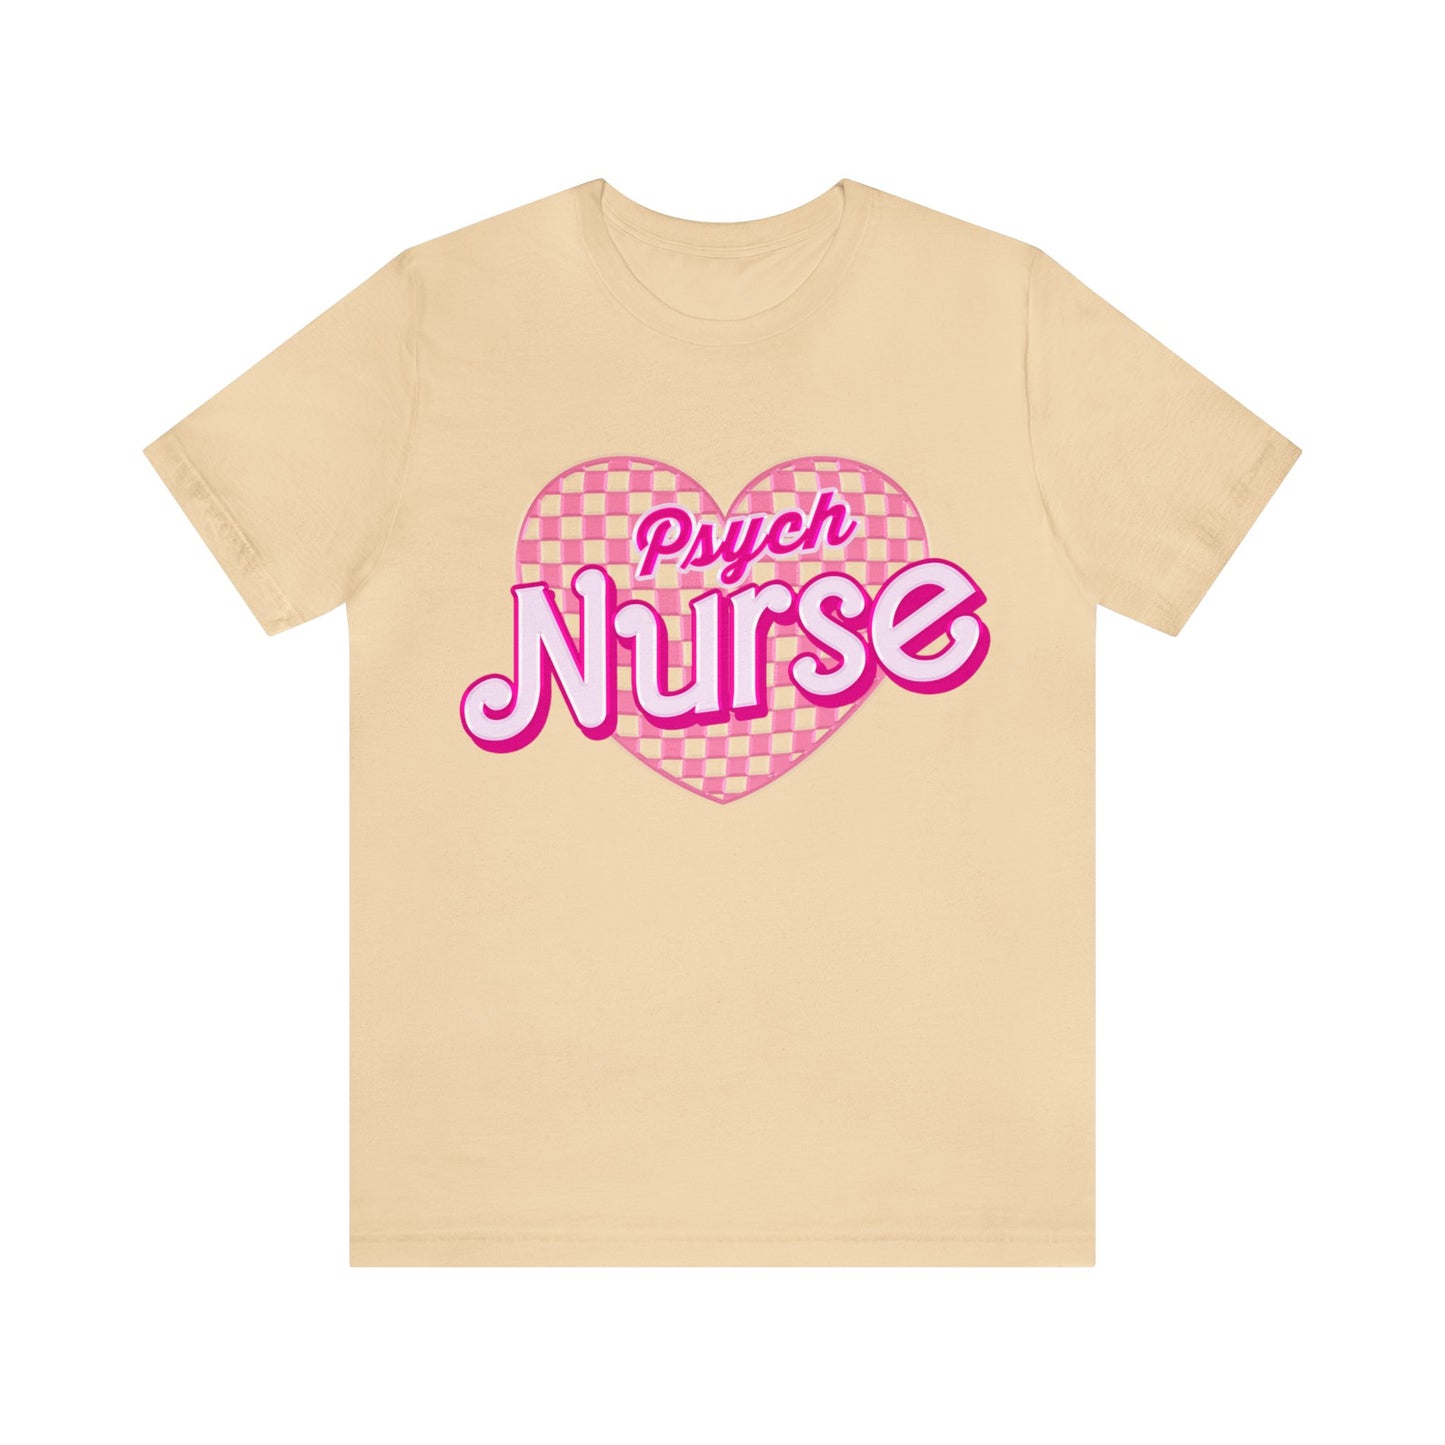 Psych Nurse Shirt for Women, RN TShirt for Registered Nurse, Mental Health Nurse Shirt, Gift for Registered Nurse, RN Graduation Gift, T1497